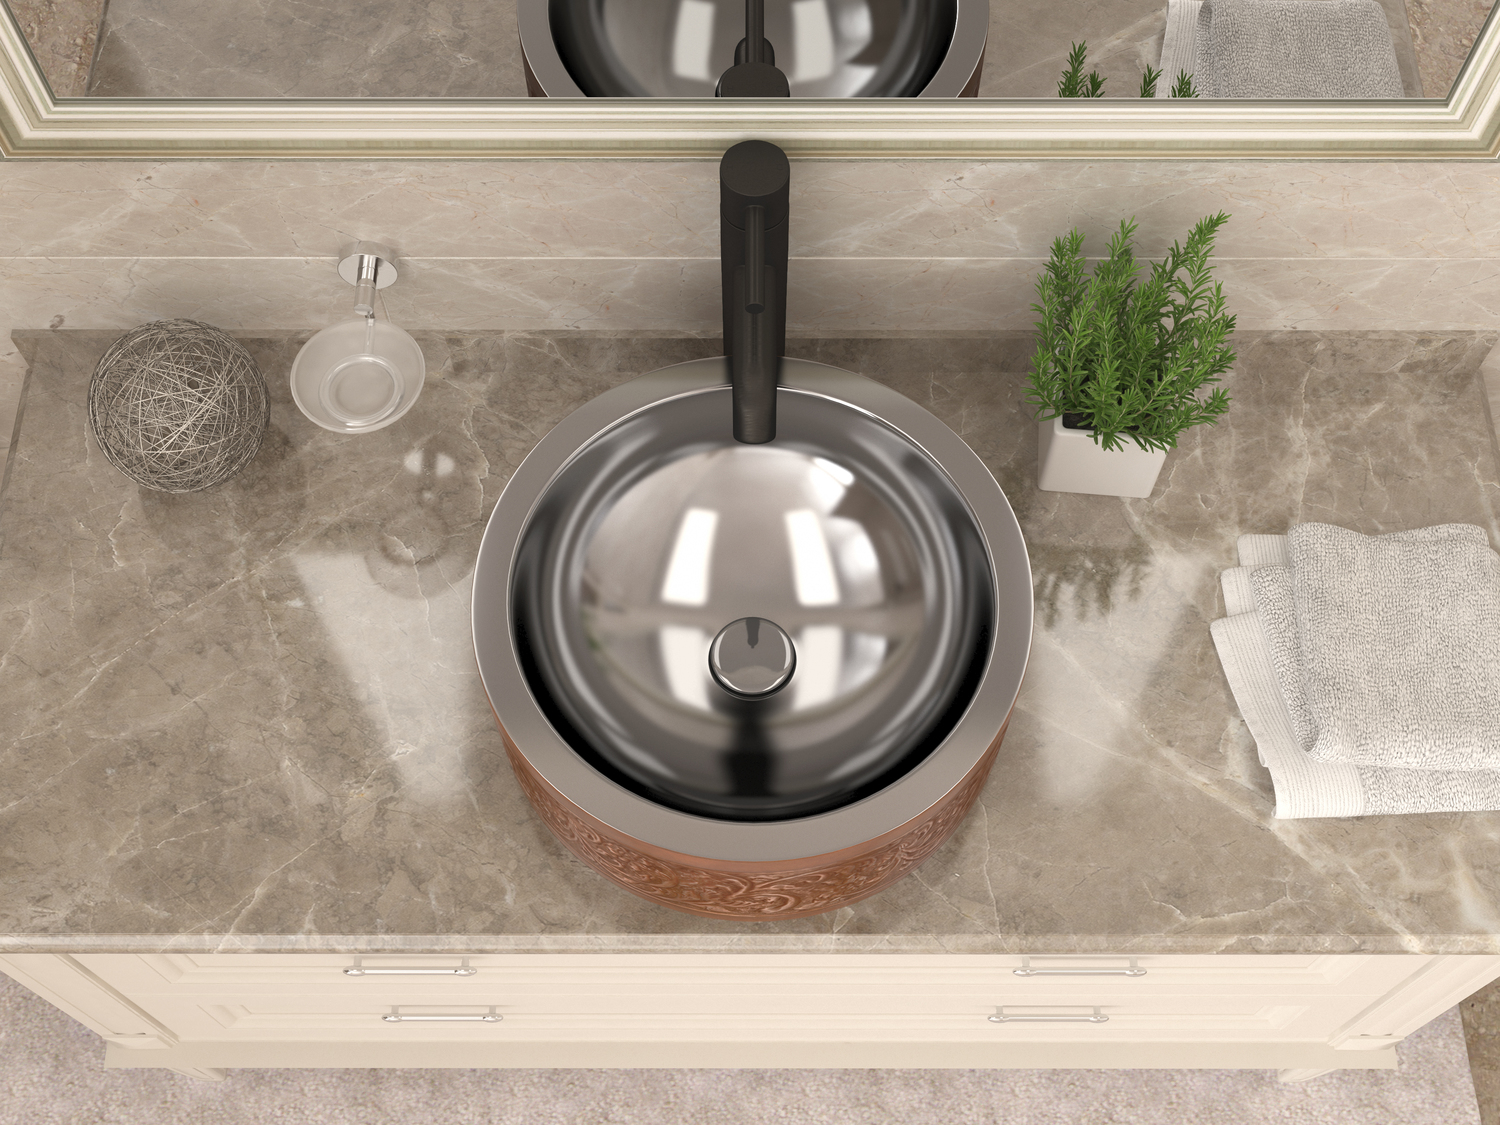 green bathroom basin Anzzi BATHROOM - Sinks - Vessel - Copper Copper